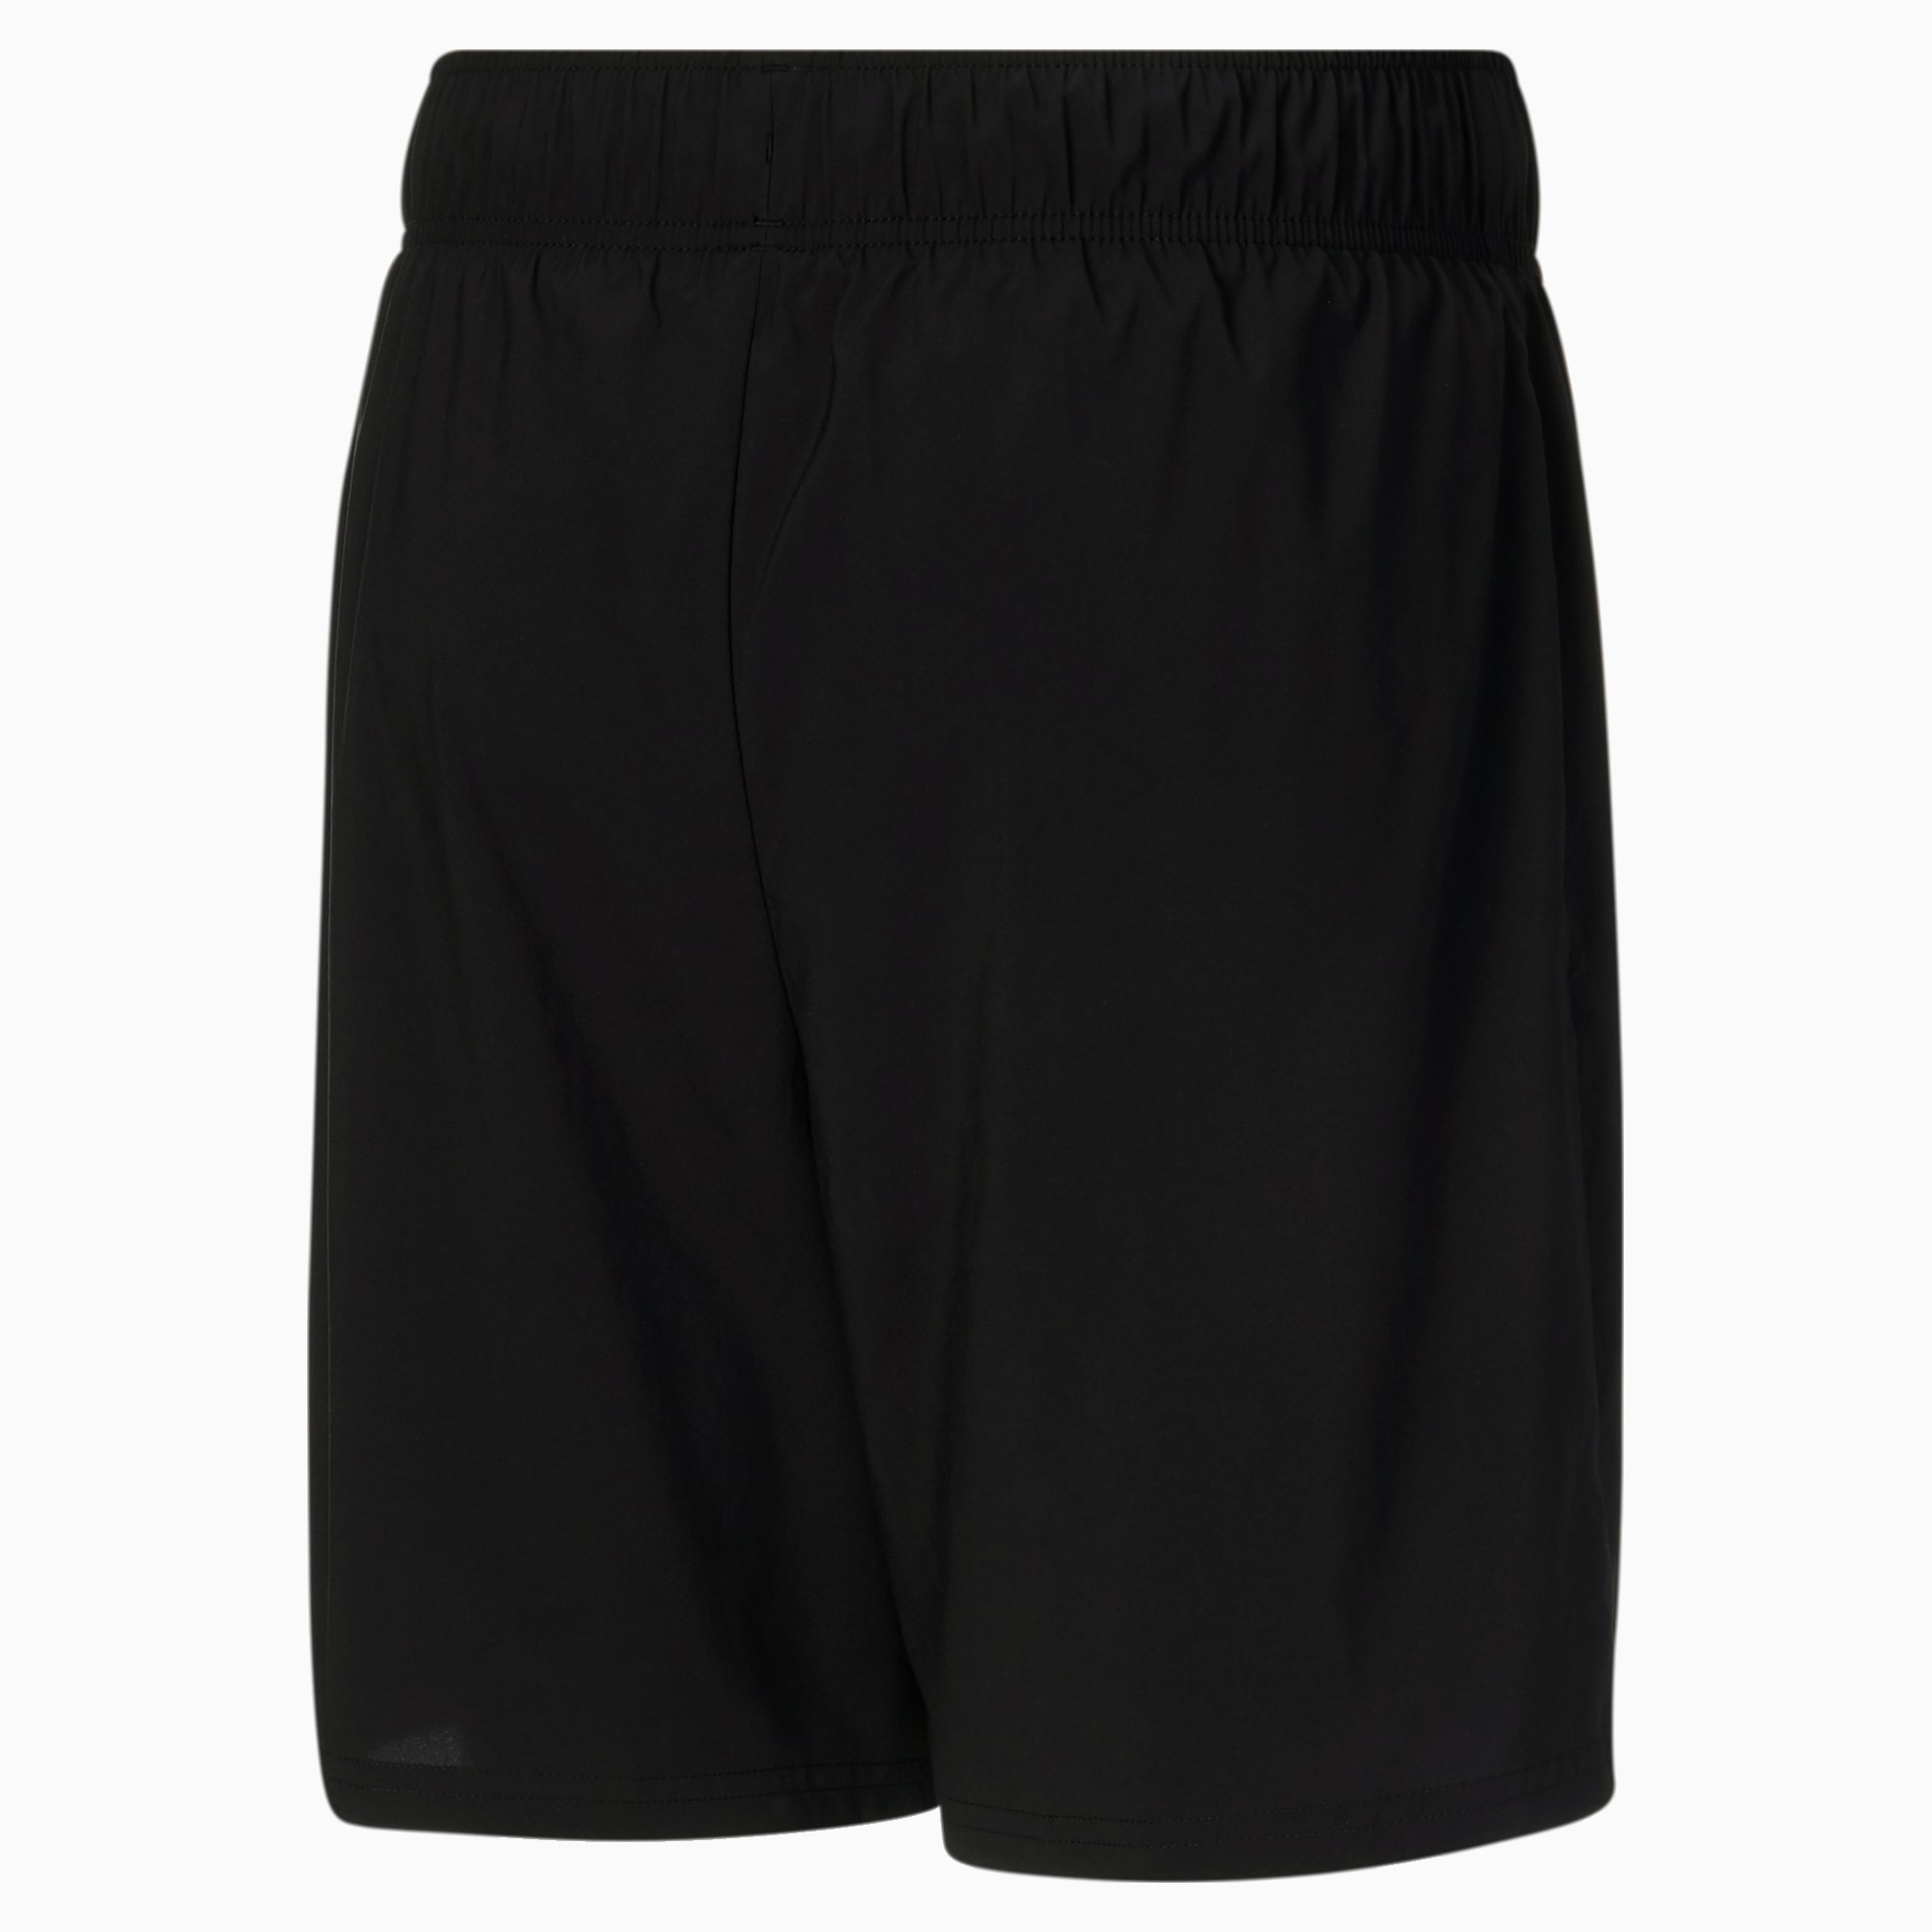 PUMA Favourite 2-in-1 Men's Running Shorts, Black, Size 3XL, Clothing